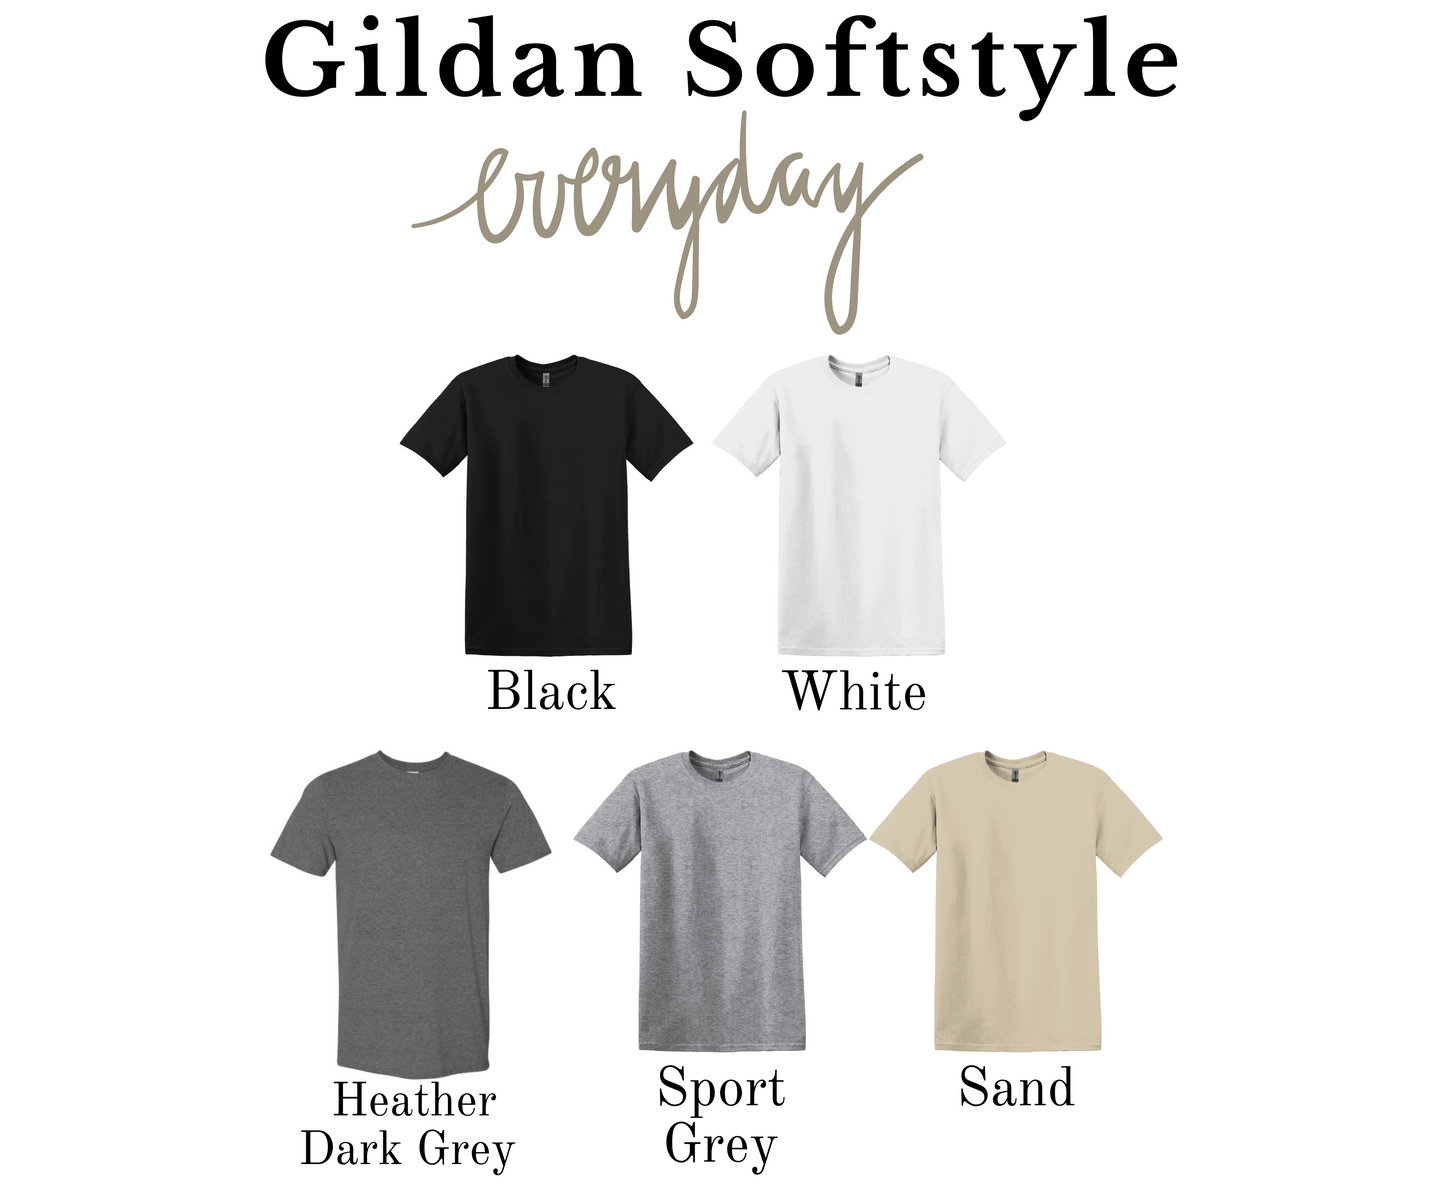 Softball Bow Gildan Softstyle Sweatshirt or T-shirt